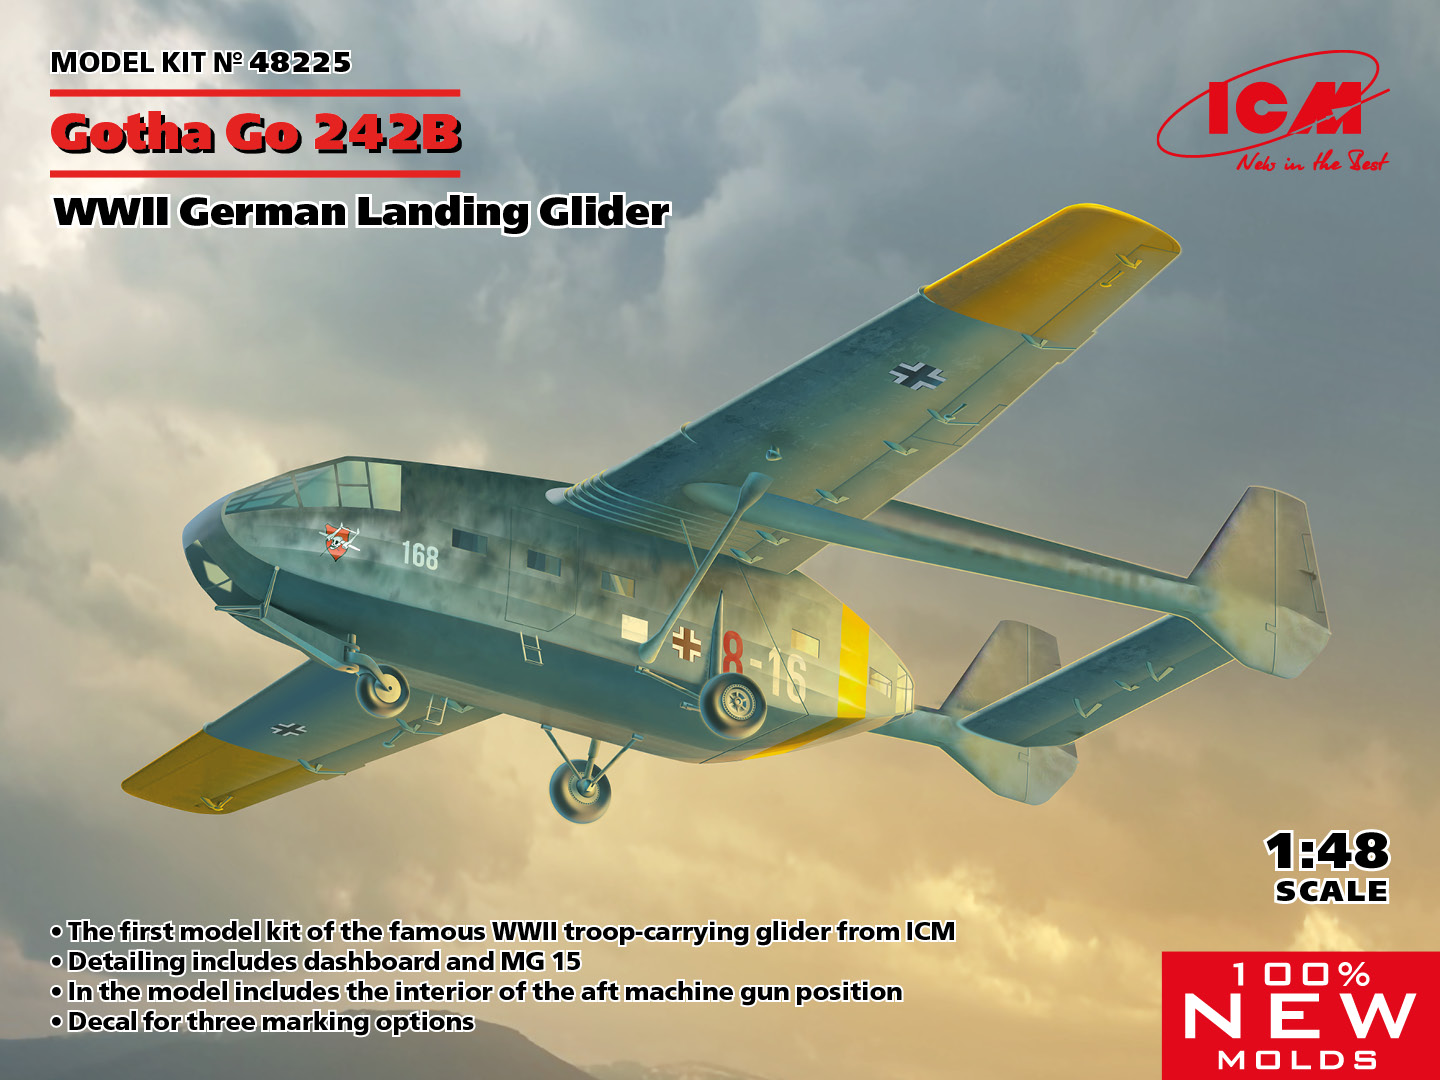 1:48 ICM Gotha Go 242B, WWII German Landing Glider